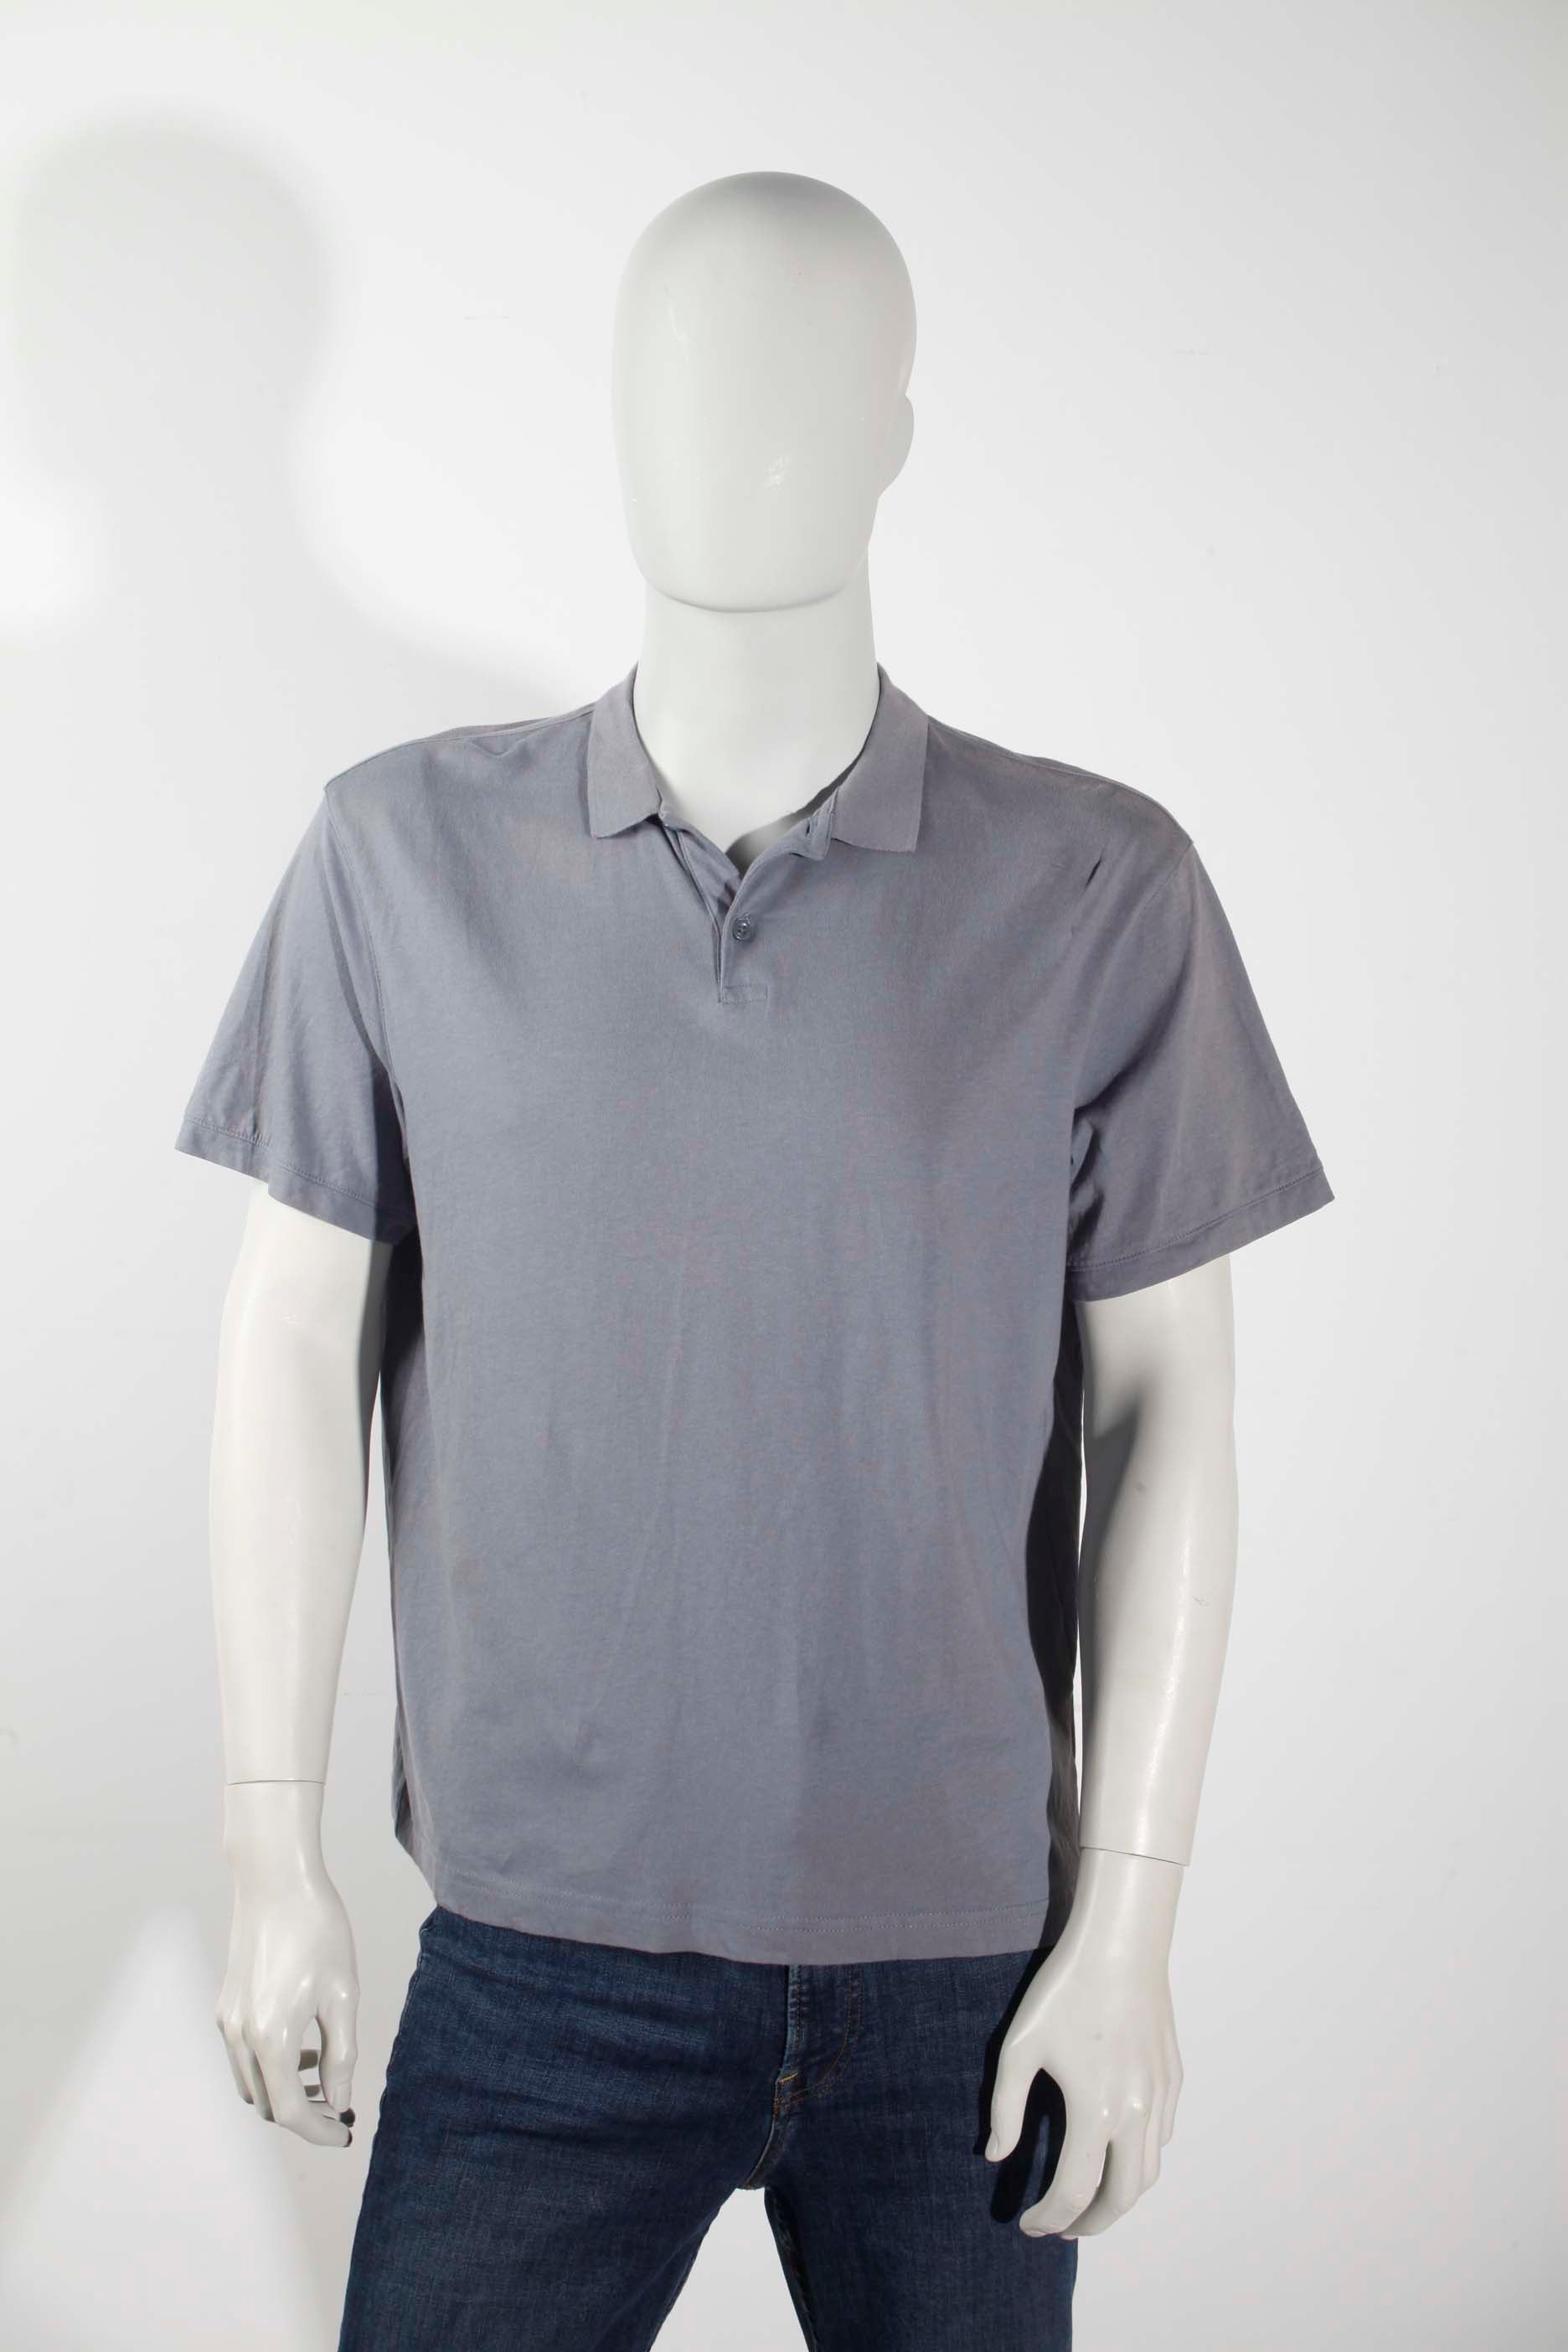 H&M Blue-Grey Polo Shirt (Medium)